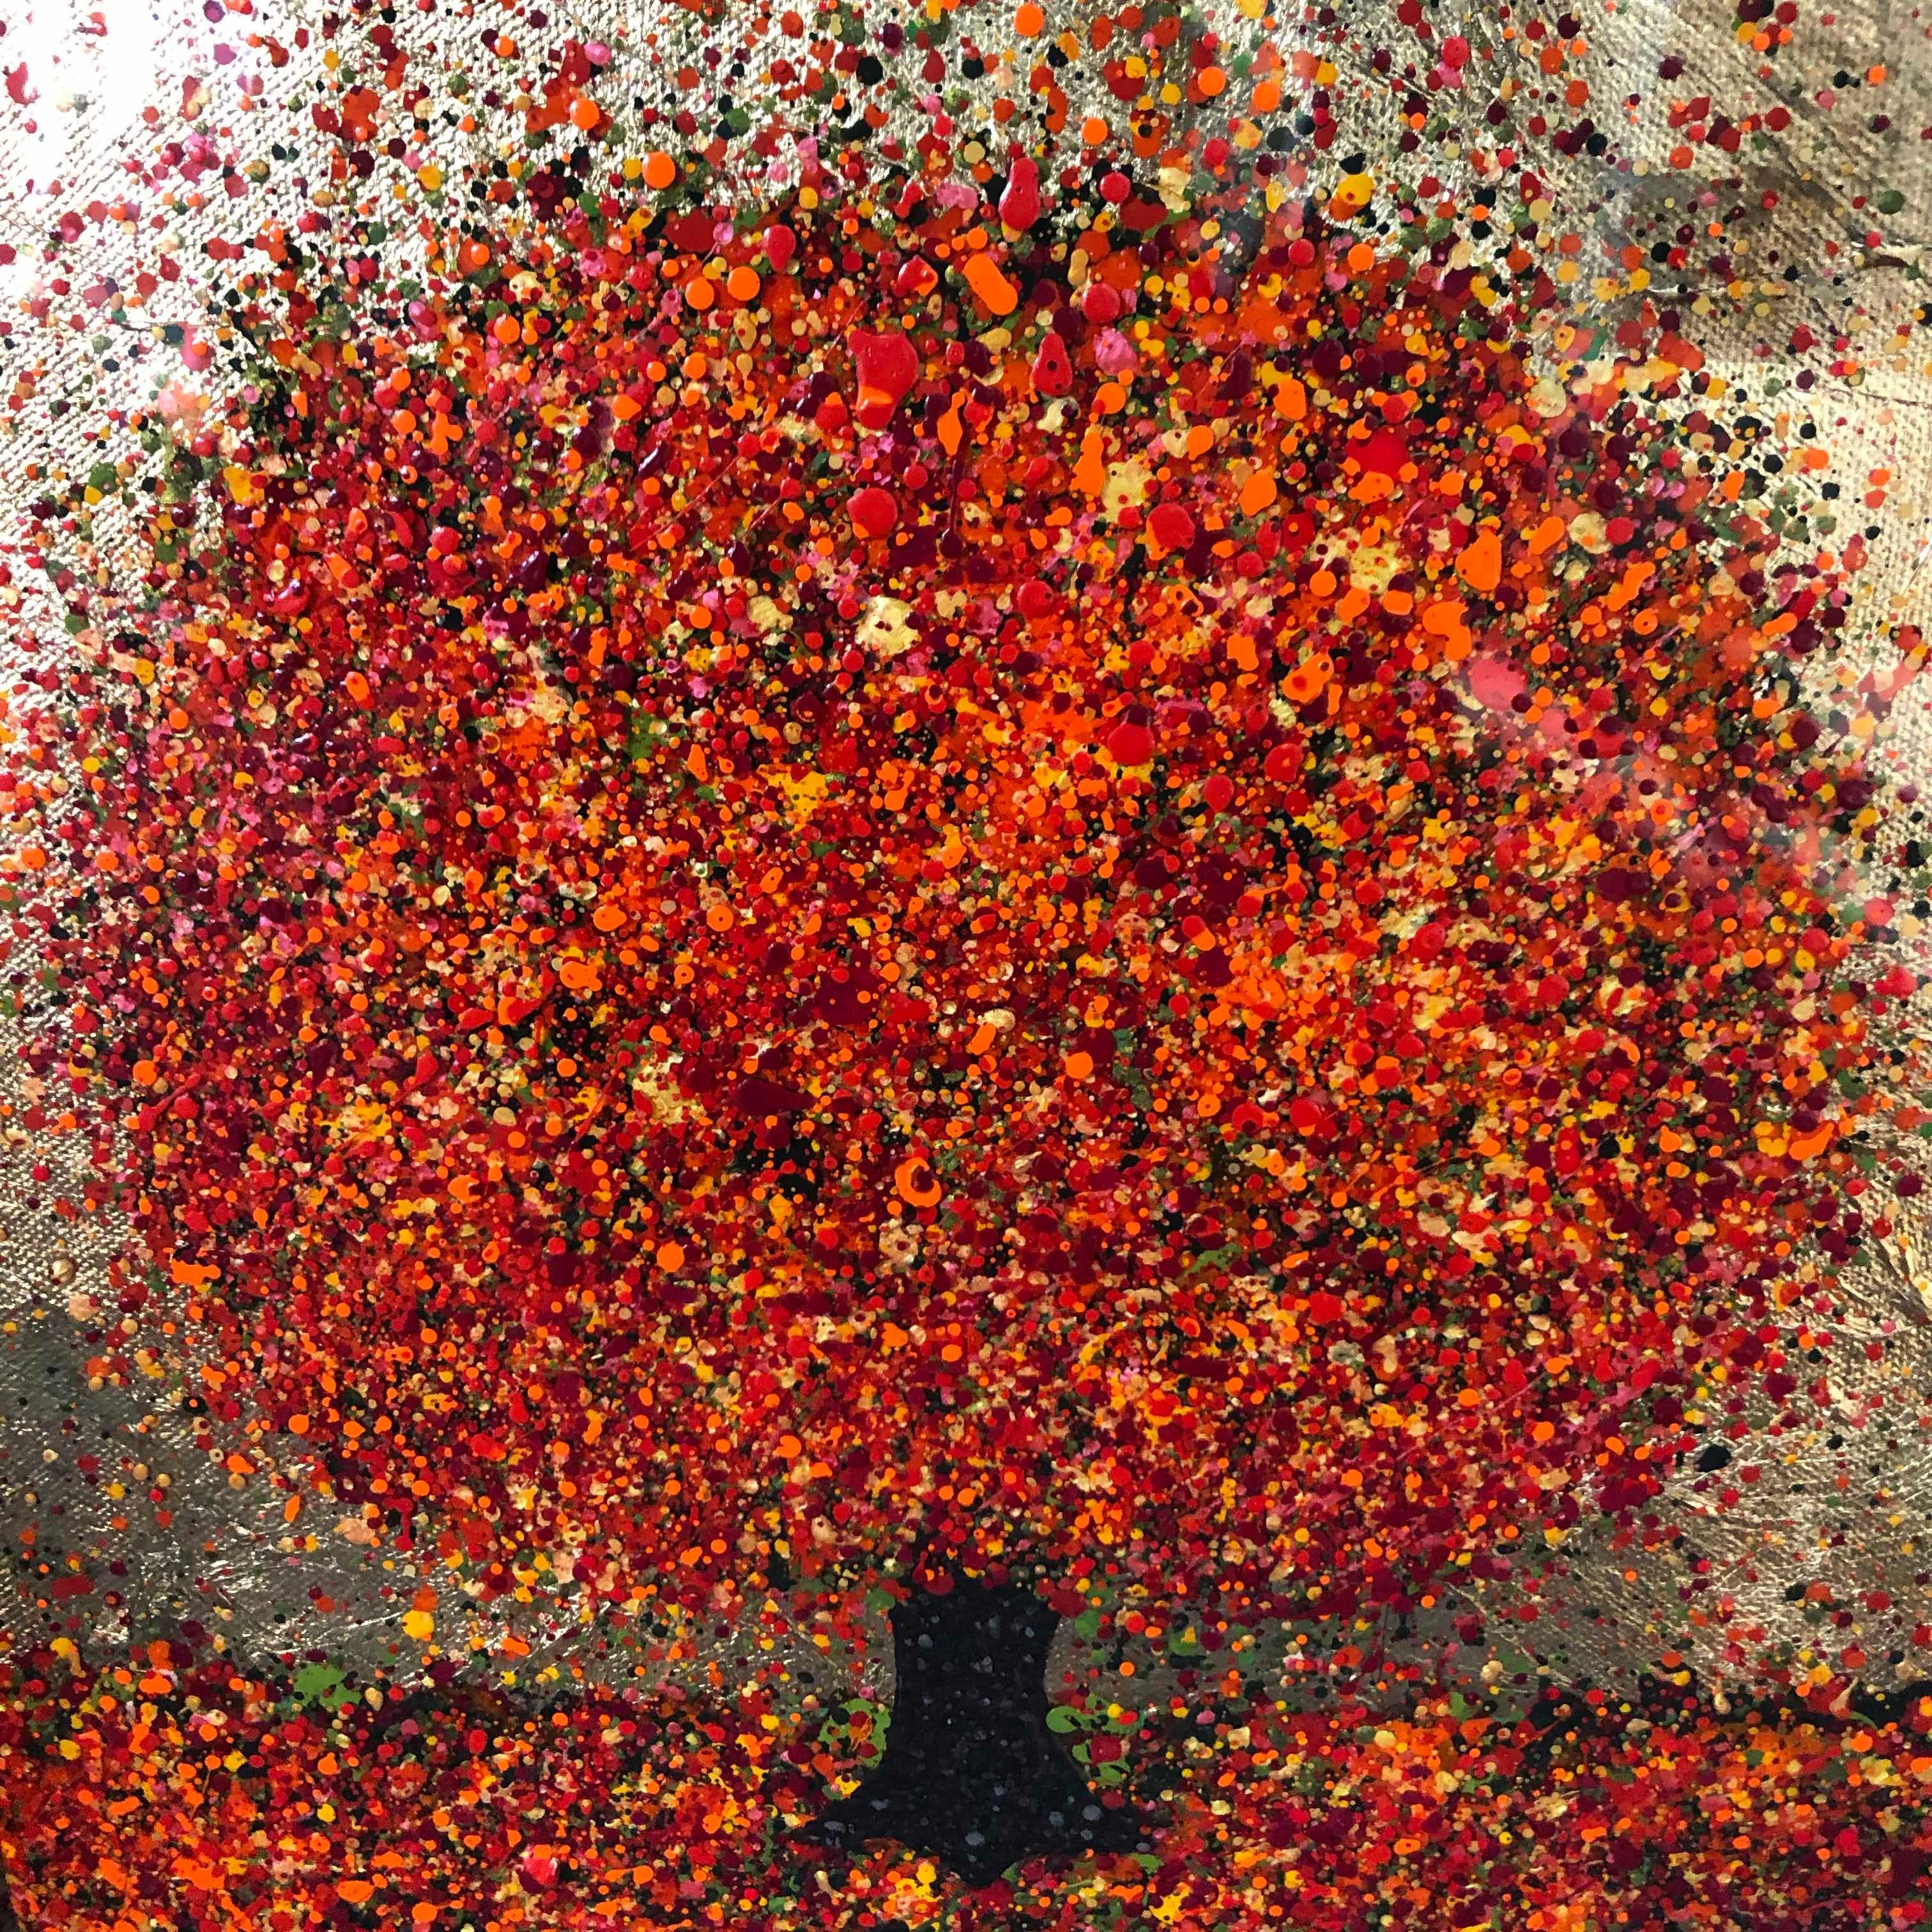 Nicky Chubb
Tumbling Autumn Colours
Original Landscape Painting
Acrylic Paint, Gold Leaf and Resin on Canvas
Canvas Size: H 30cm x W 30cm x D 4cm
Sold Unframed

Tumbling Autumn Colours is an original painting by Nicky Chubb. The gold background and